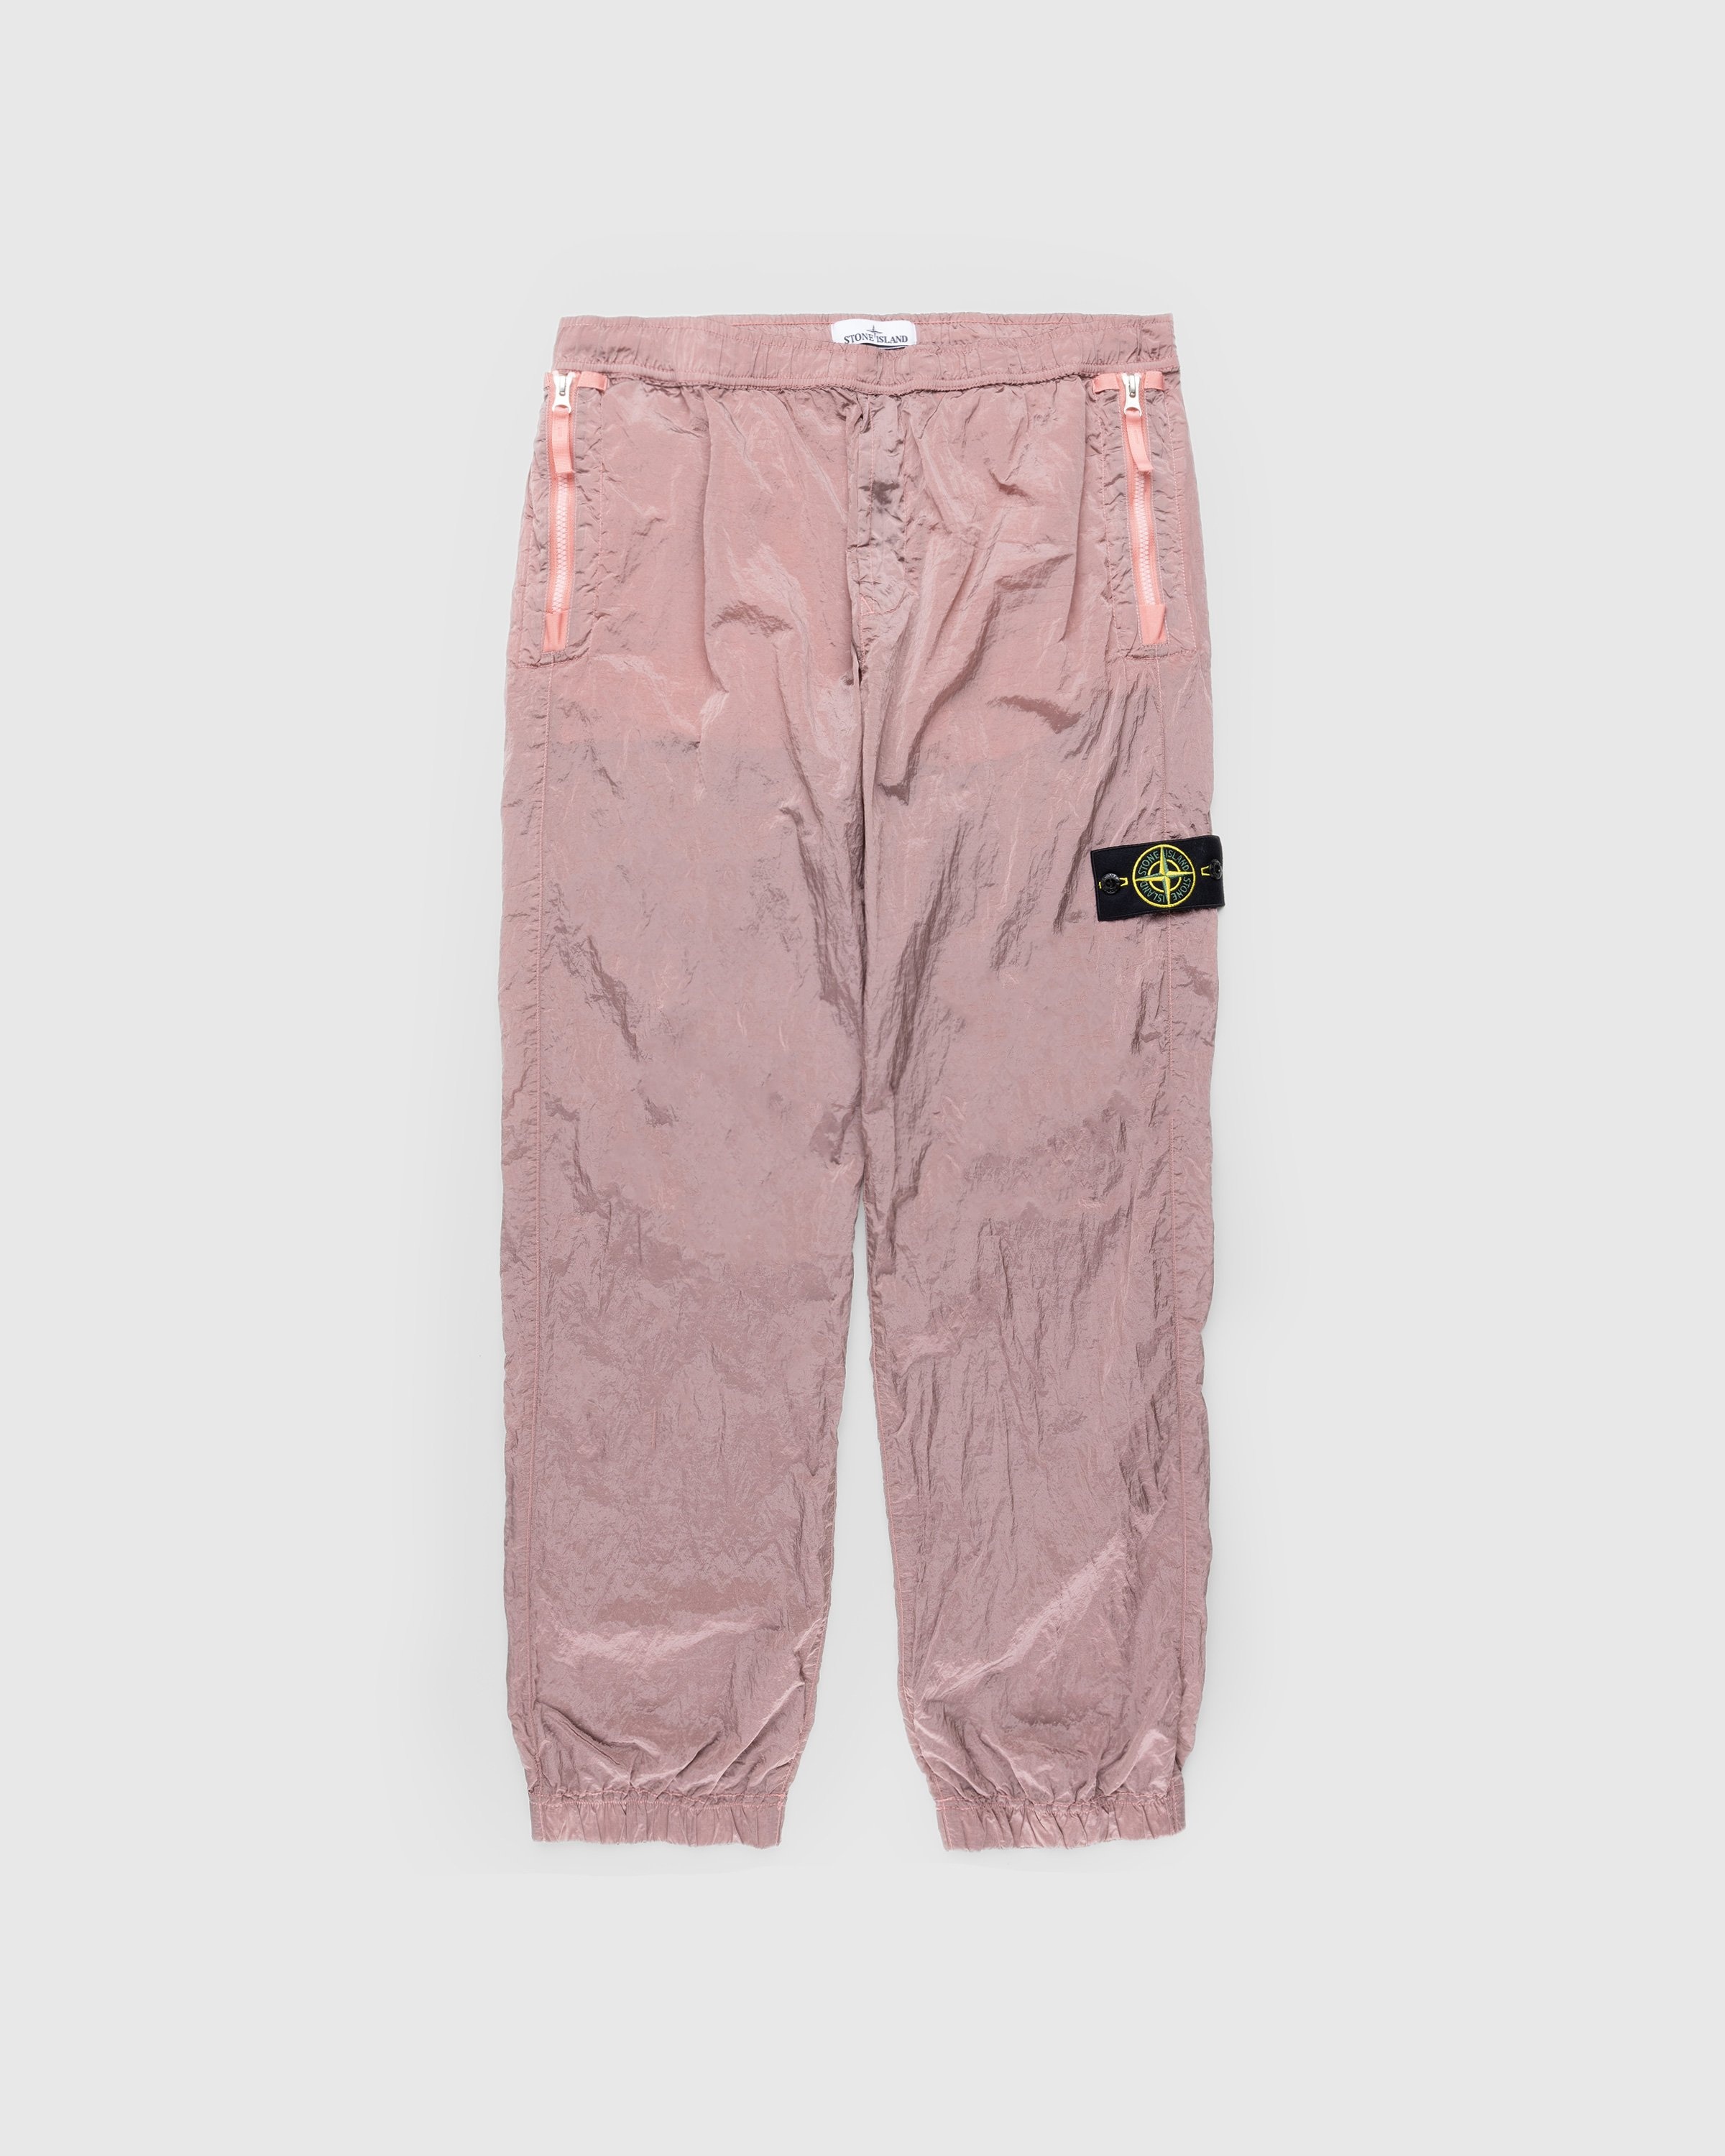 Stone Island – Pantalone Loose Pink 31019 - Pants - Pink - Image 1